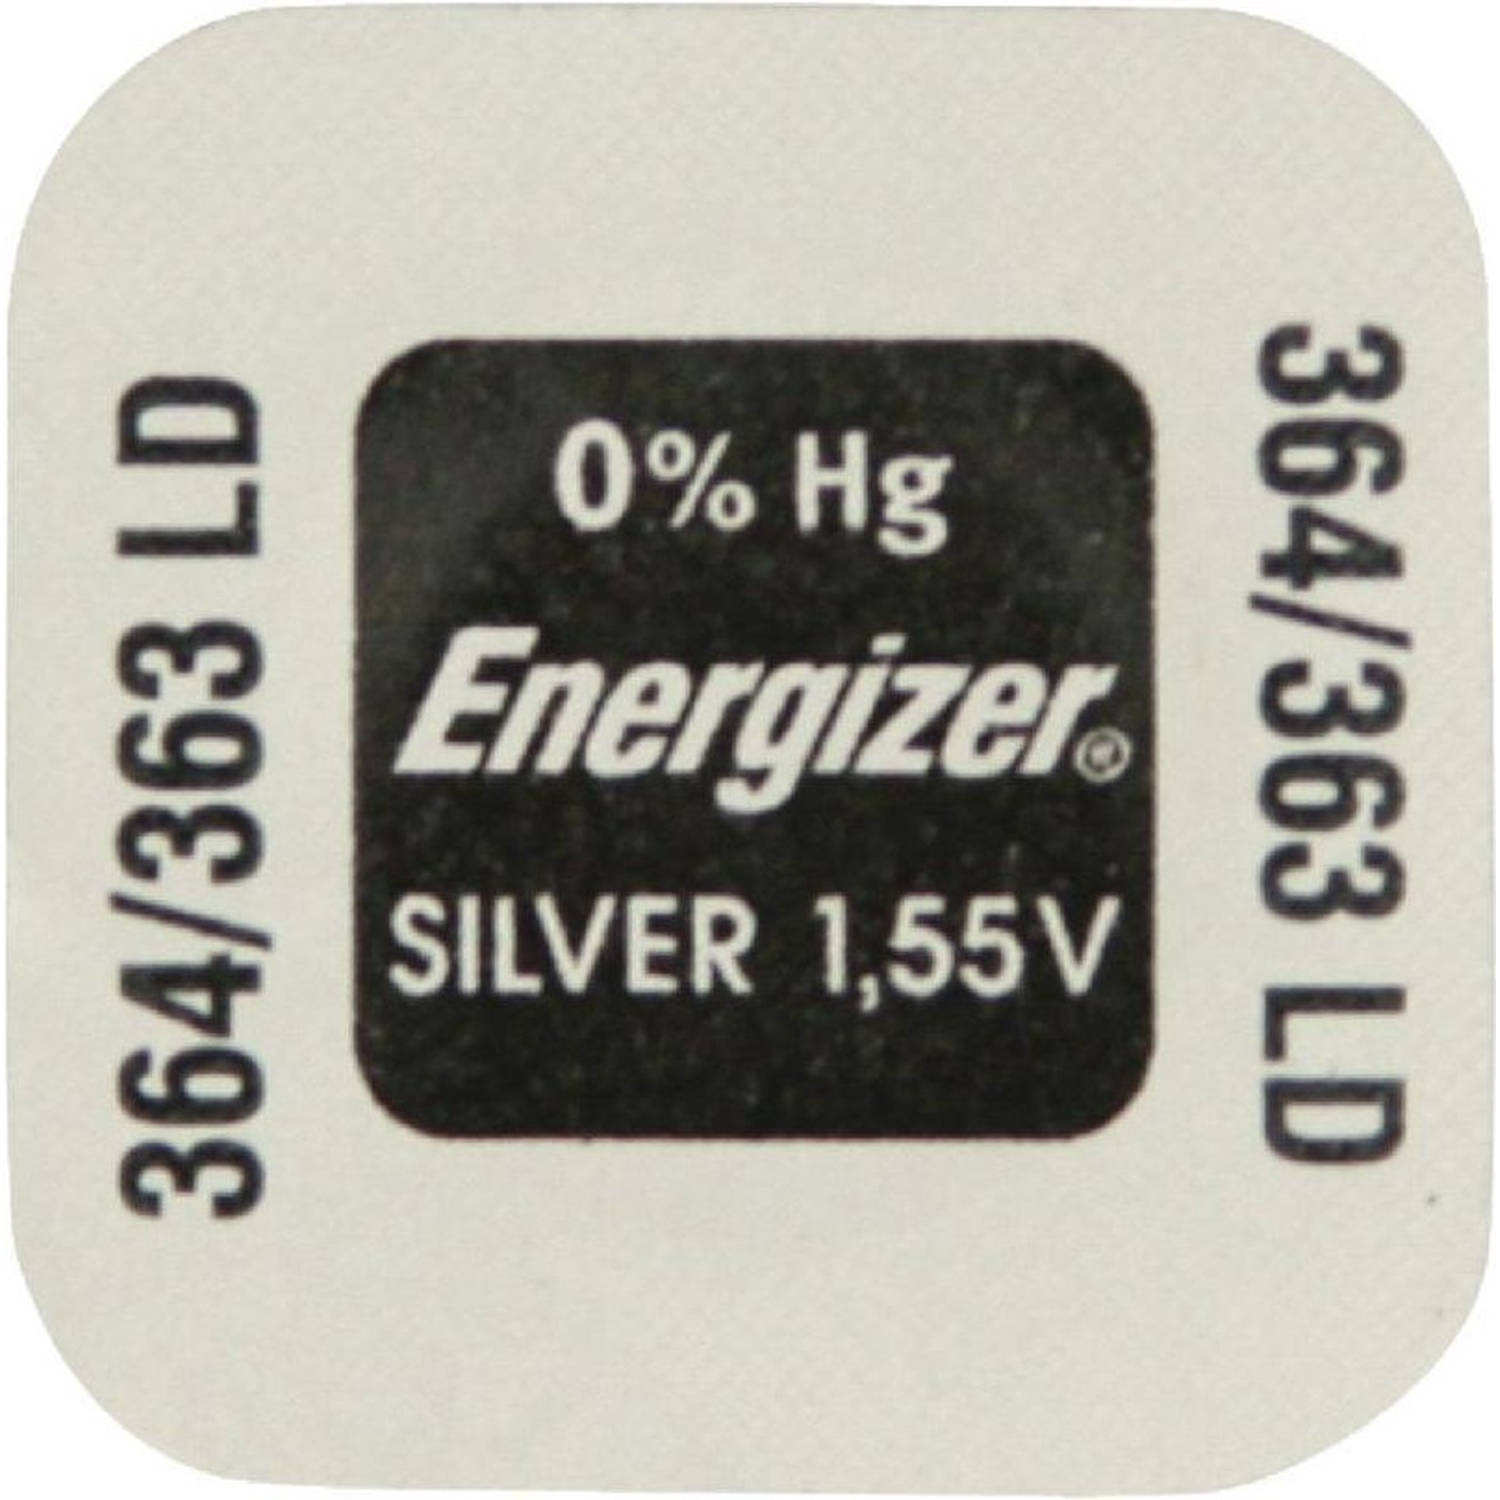 Zilveroxide Batterij SR60 1.55 V 23 mAh 1-Pack